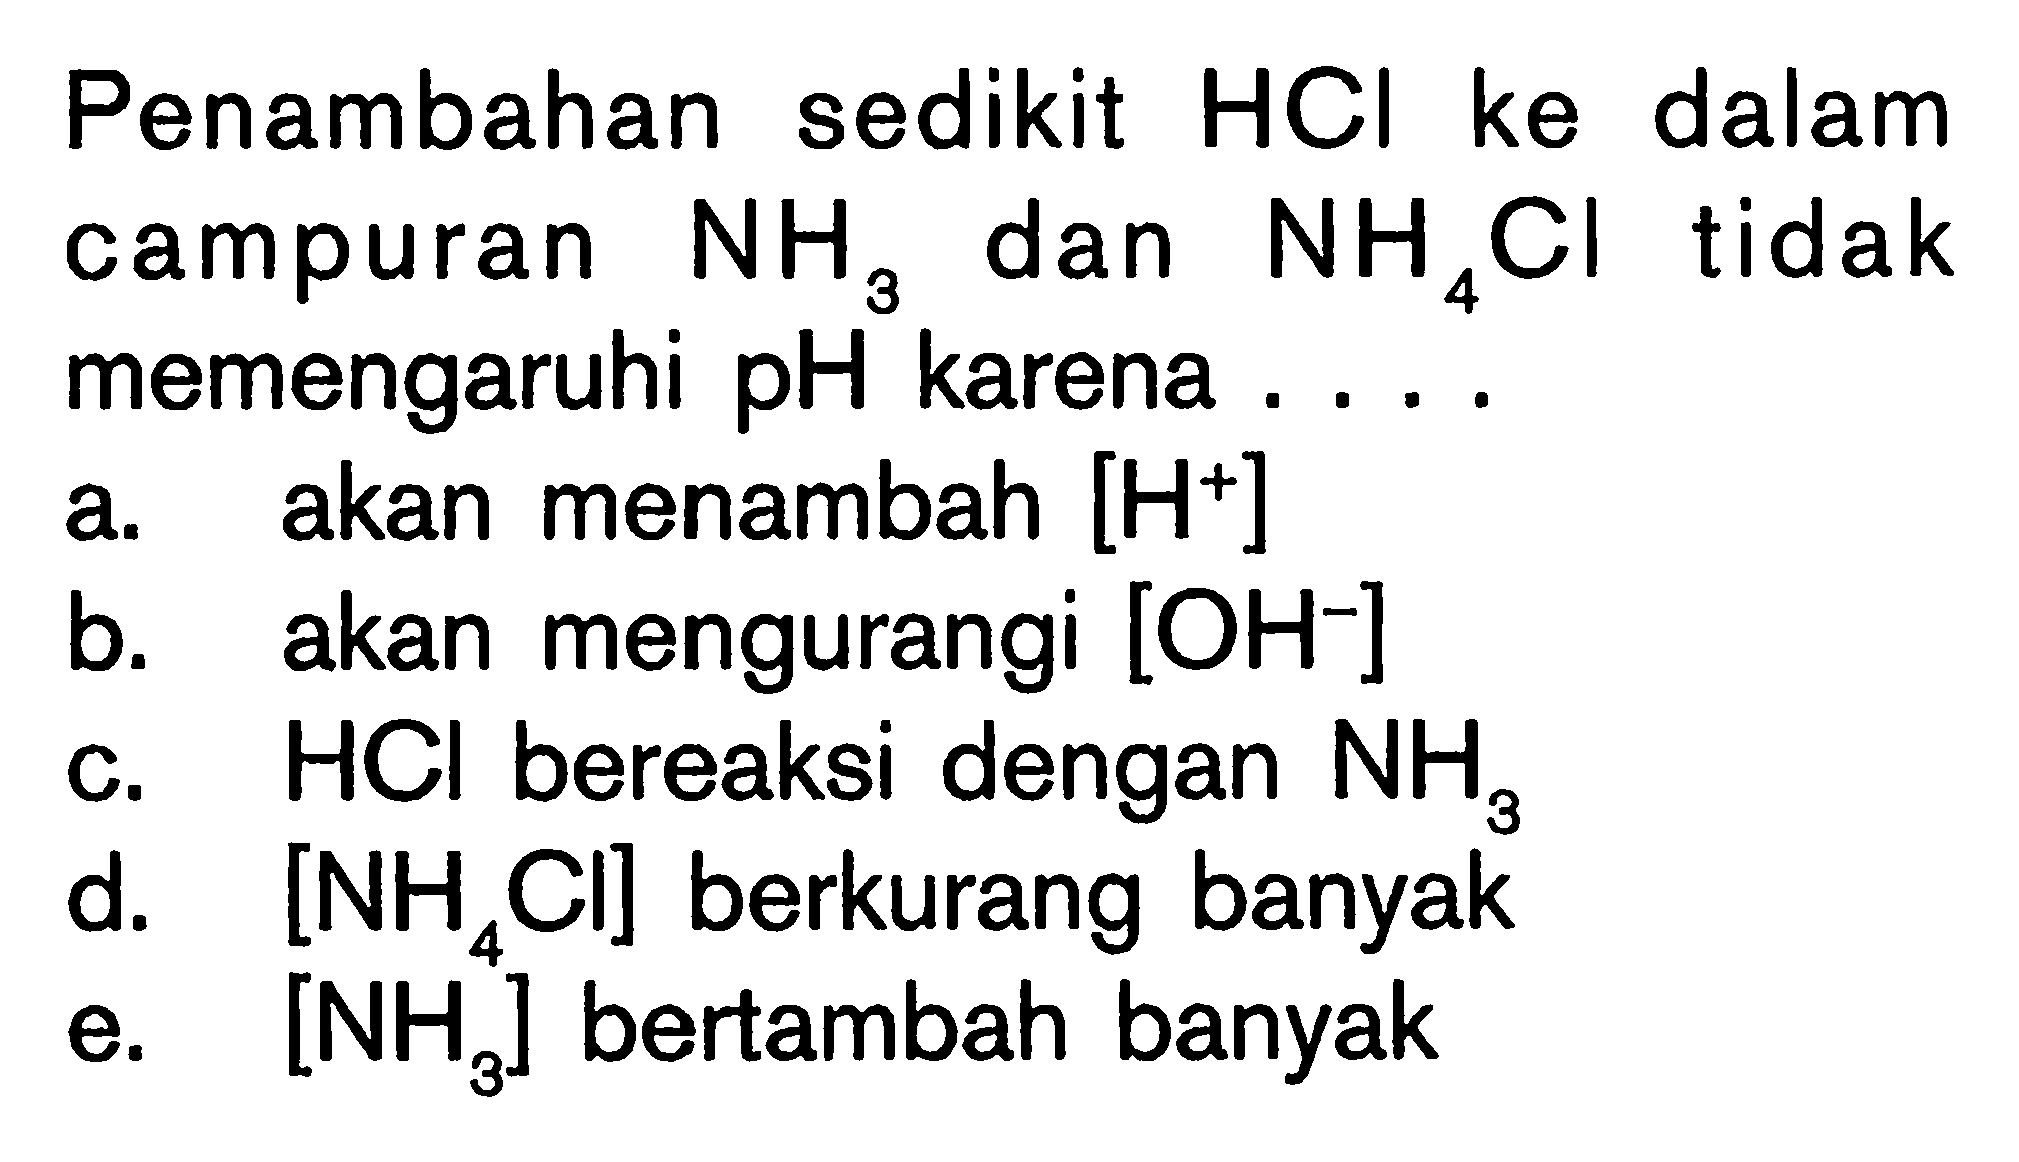 Penambahan sedikit HCl ke dalam campuran NH3 dan NH4 Cl tidak memengaruhi pH karena .... a. akan menambah [H^+] b. akan mengurangi [ OH^- ] c. HCl bereaksi dengan NH3 d. [NH4 Cl] berkurang banyak e. [NH3] bertambah banyak